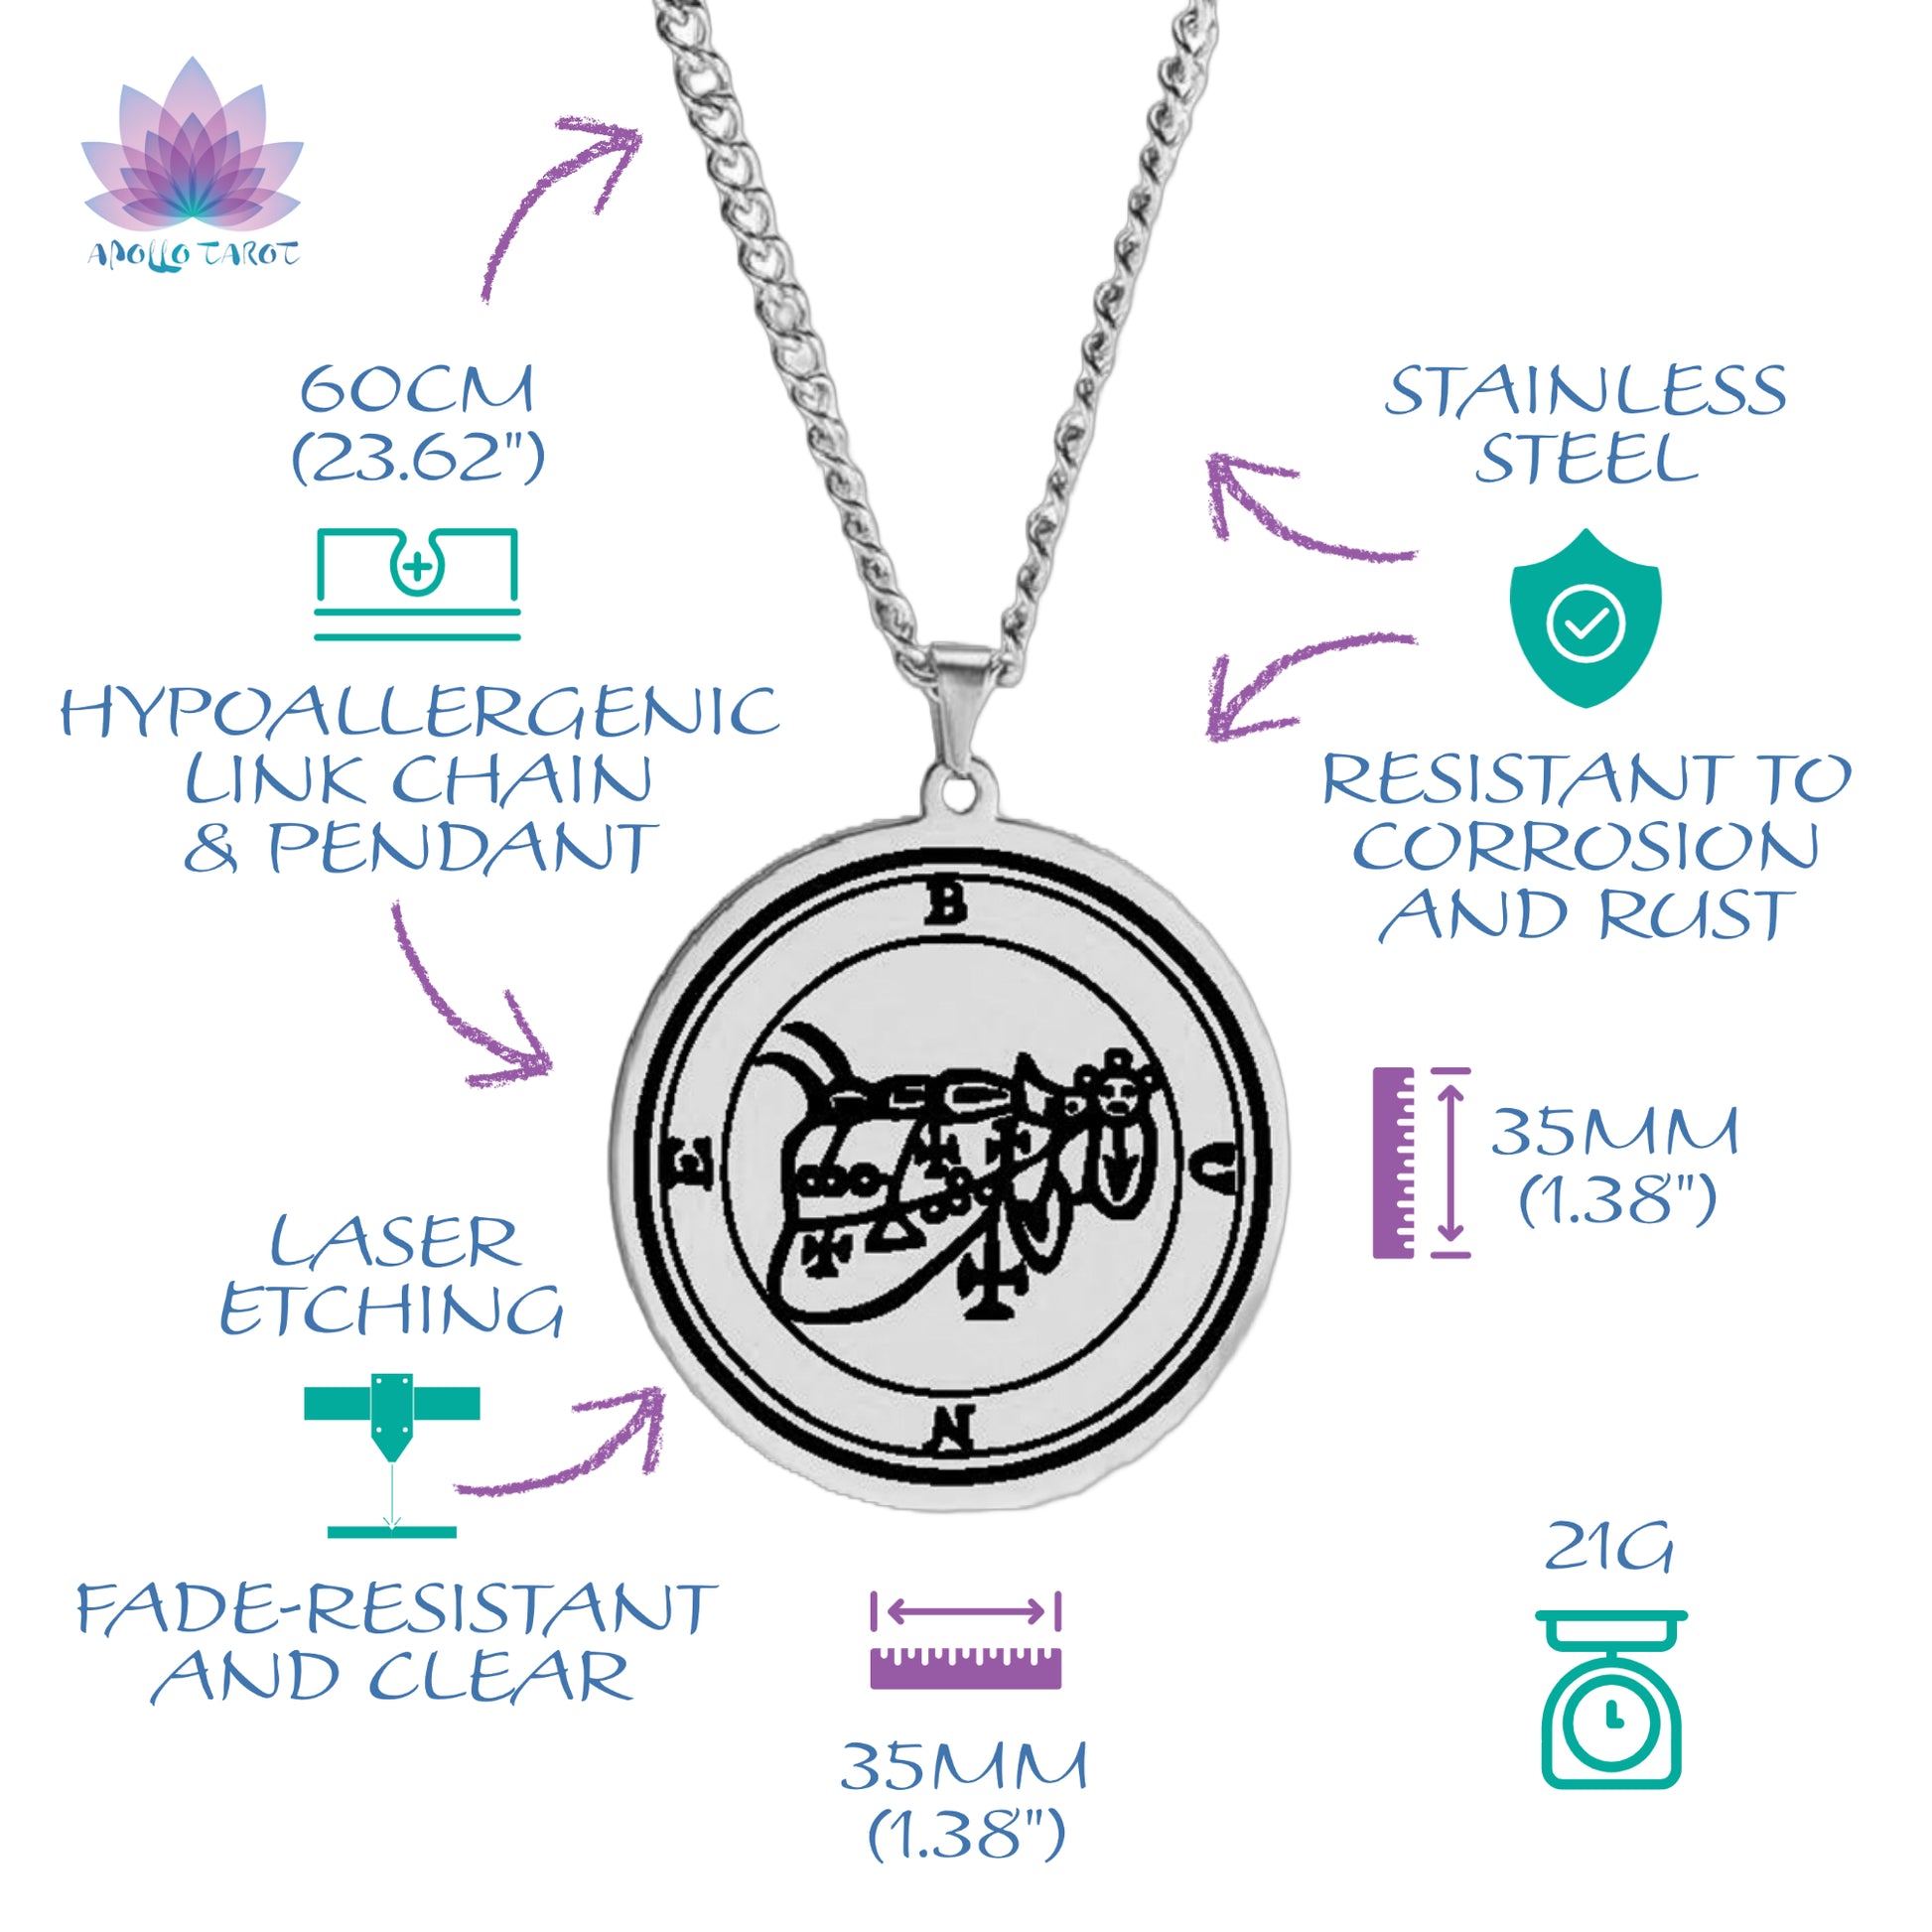 Silver Necklace Of Demon Sigil From The Lesser Key Of Solomon | Goetia Magick Pendants (Sigils 25-36) | Apollo Tarot Jewelry Shop